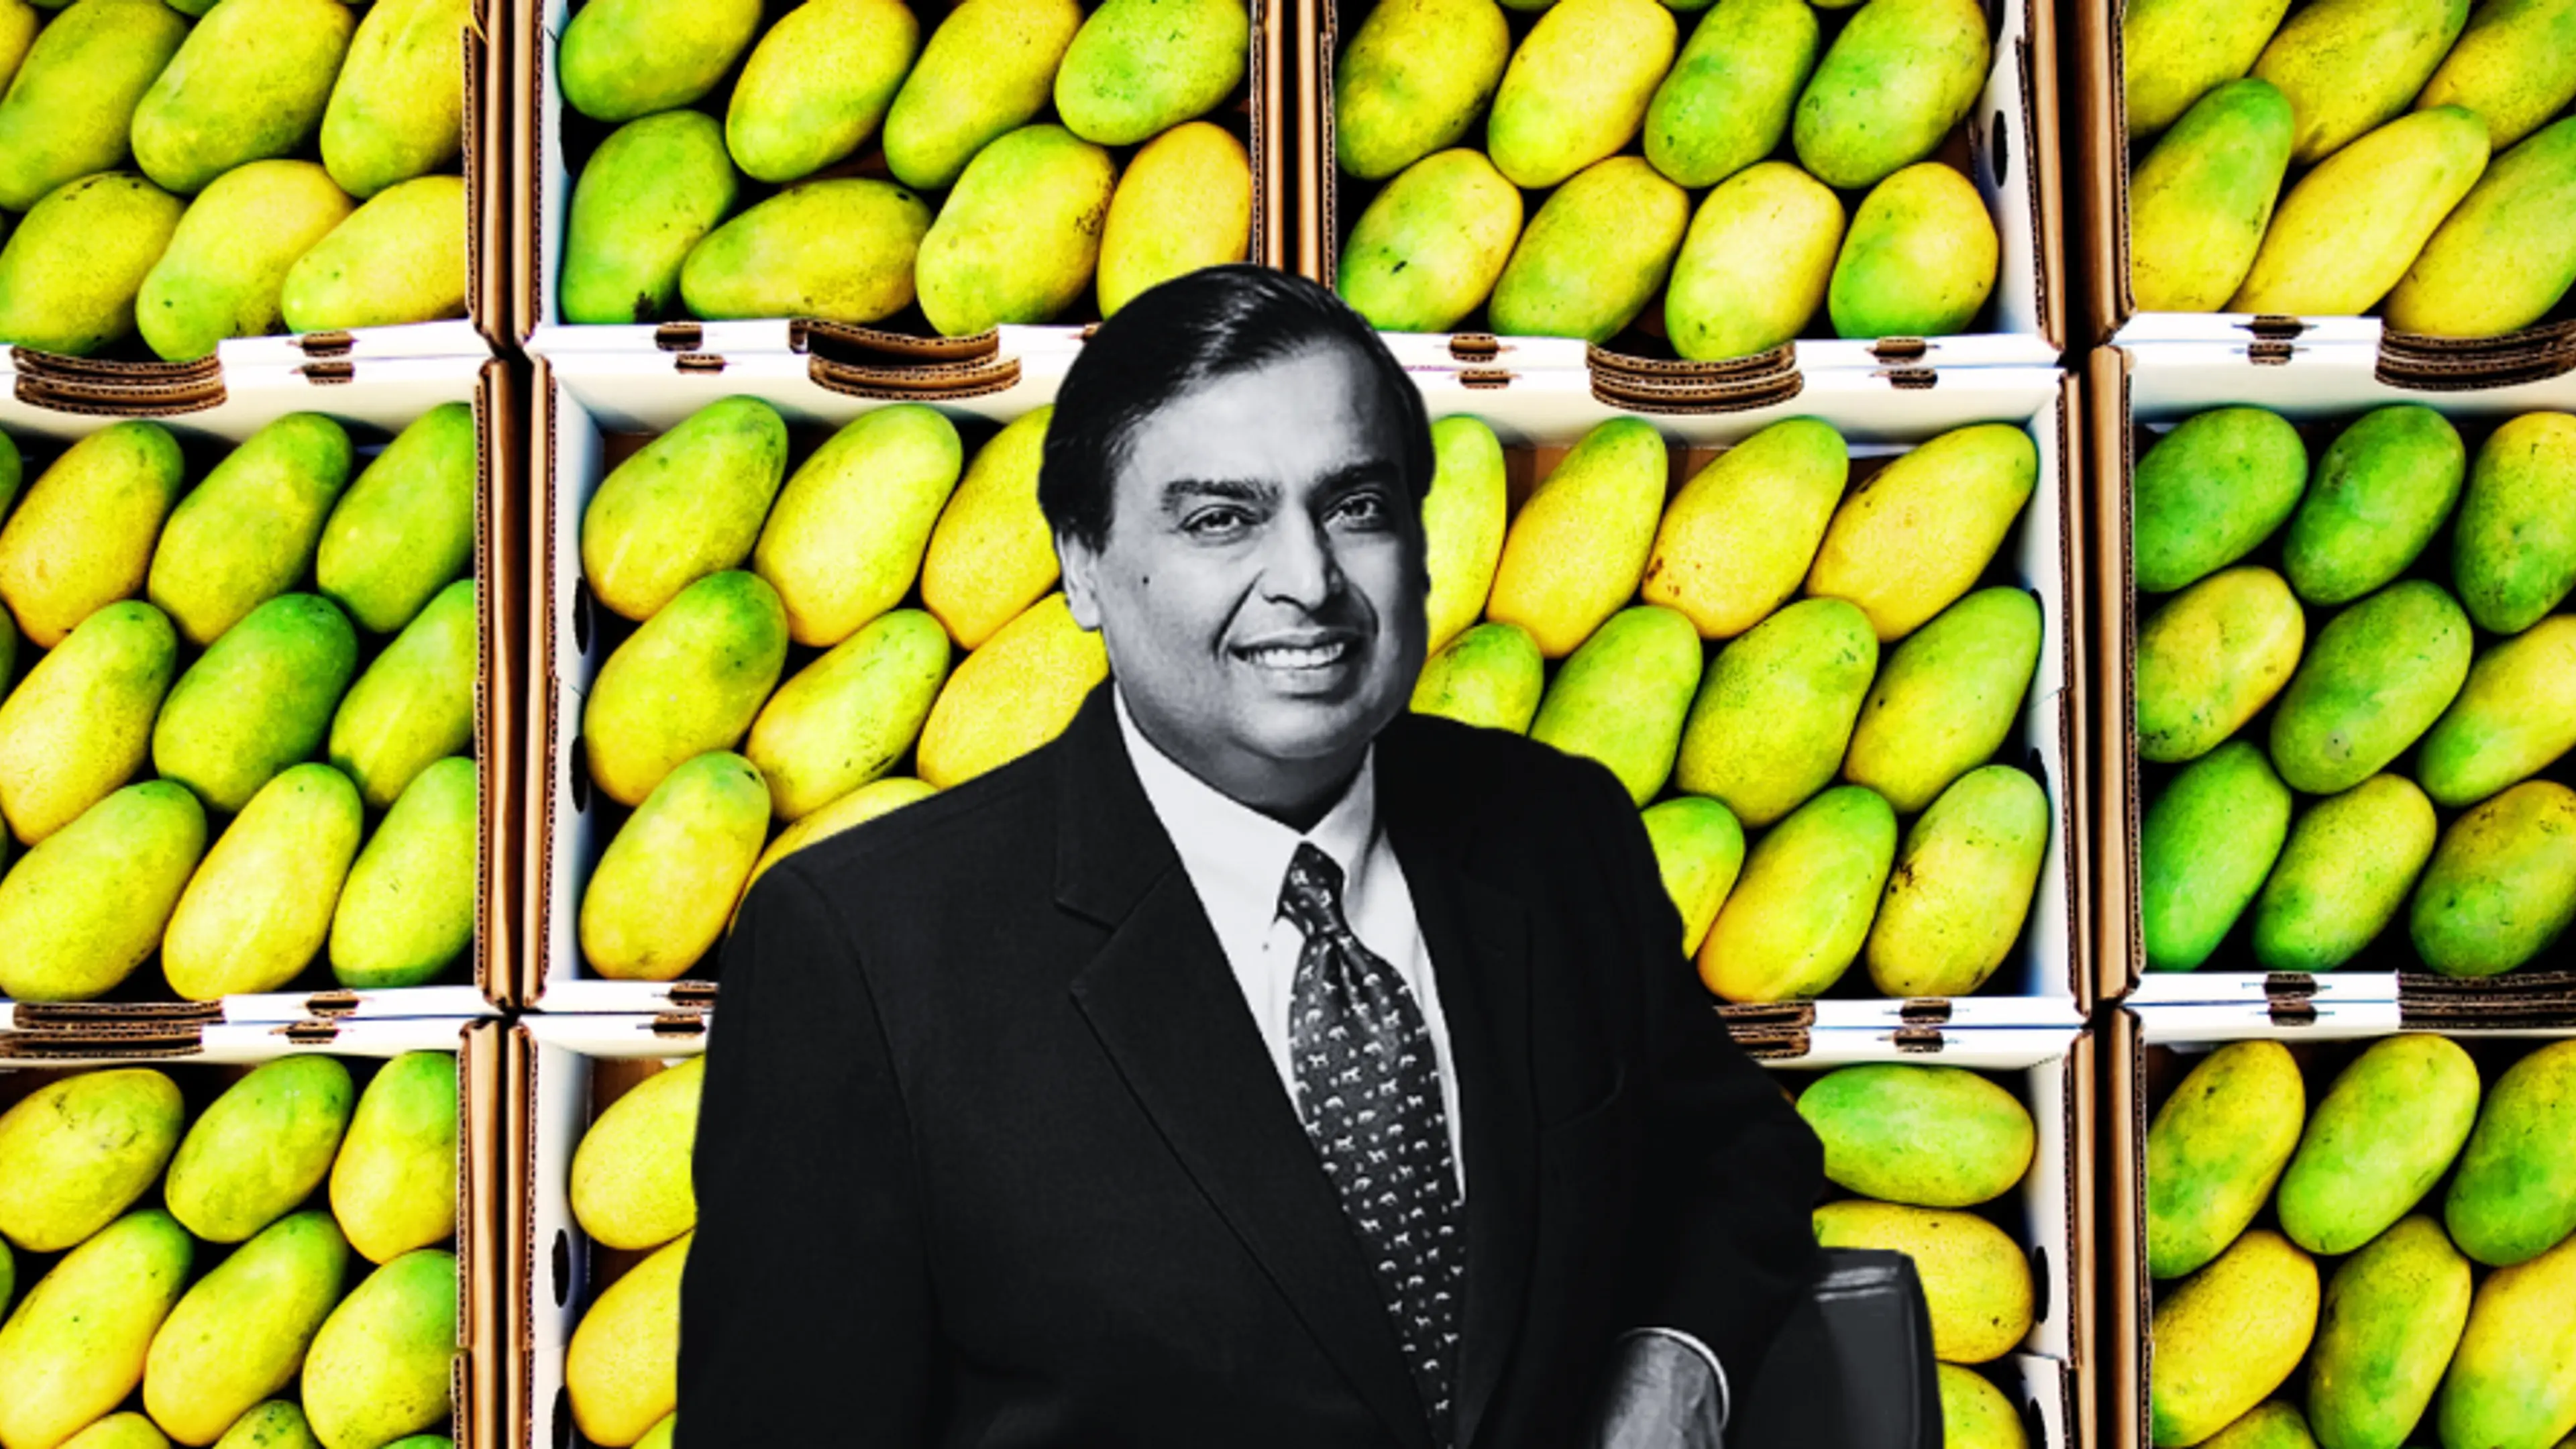 Did You Know Mukesh Ambani Is the World's Largest Mango Exporter?

